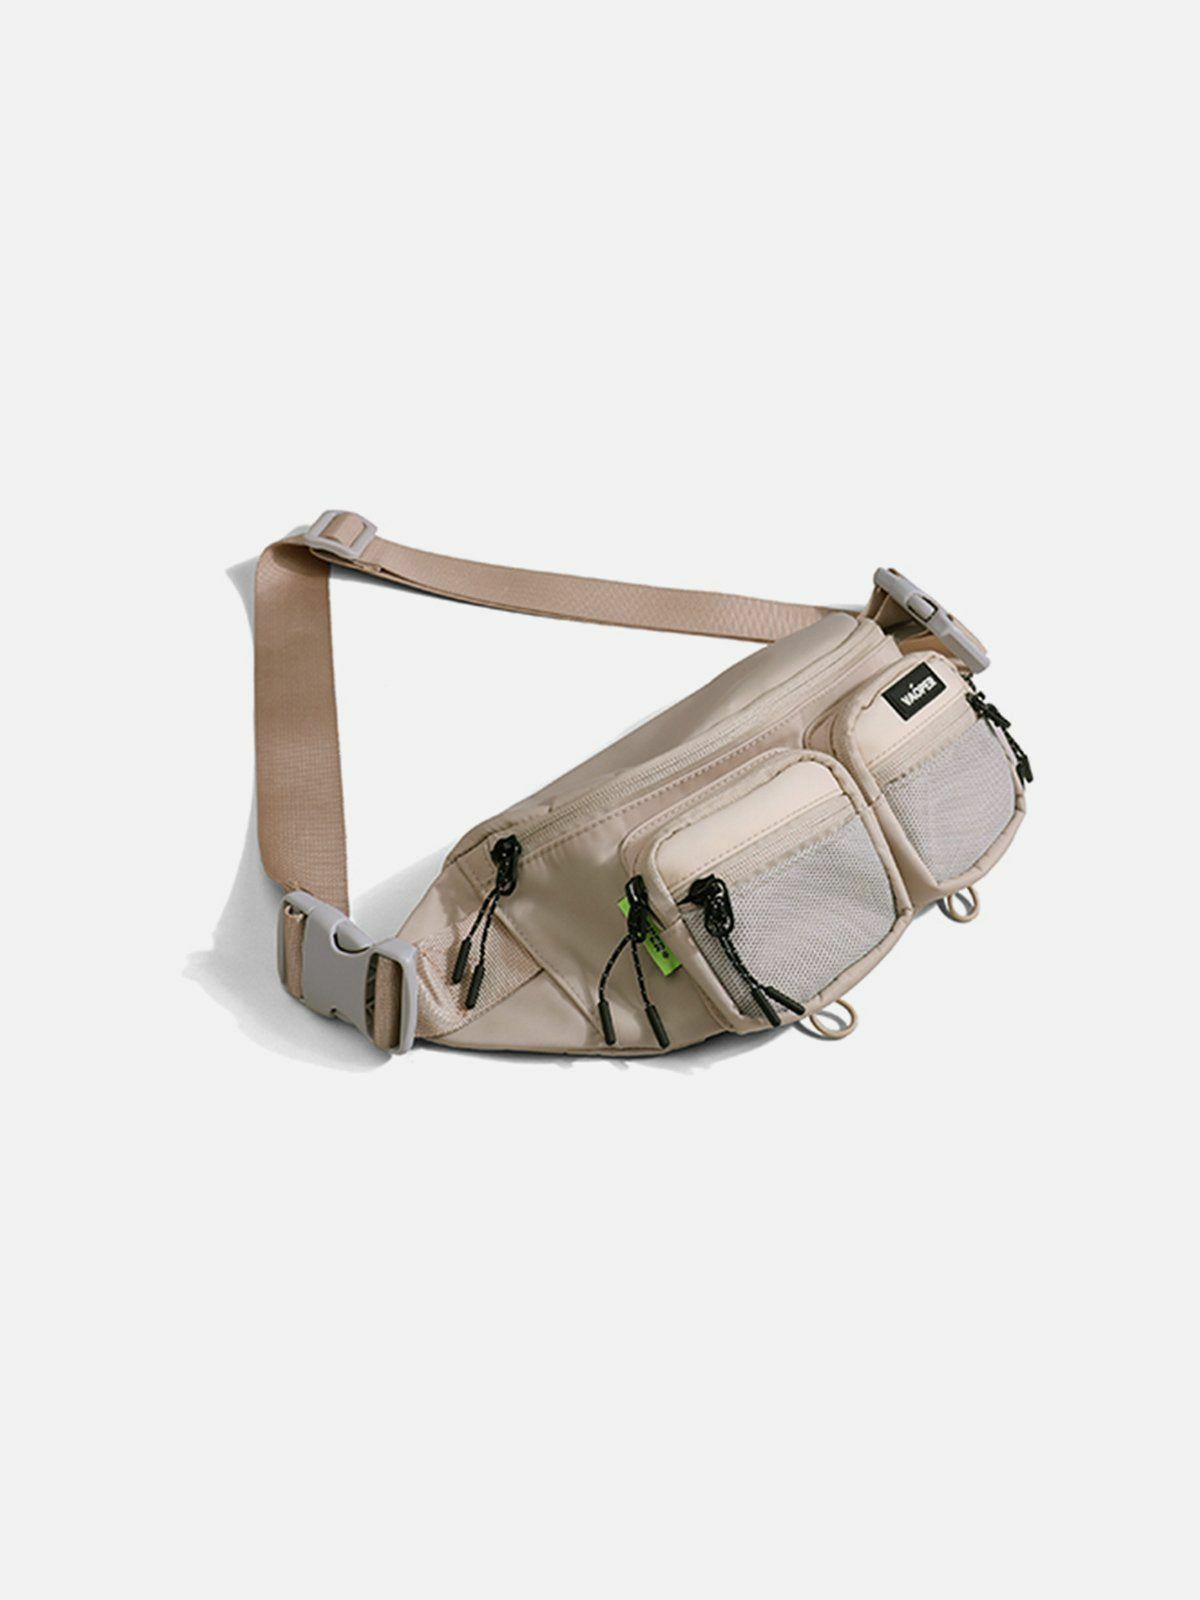 functional crossbody bag chic & edgy streetwear accessory 5218